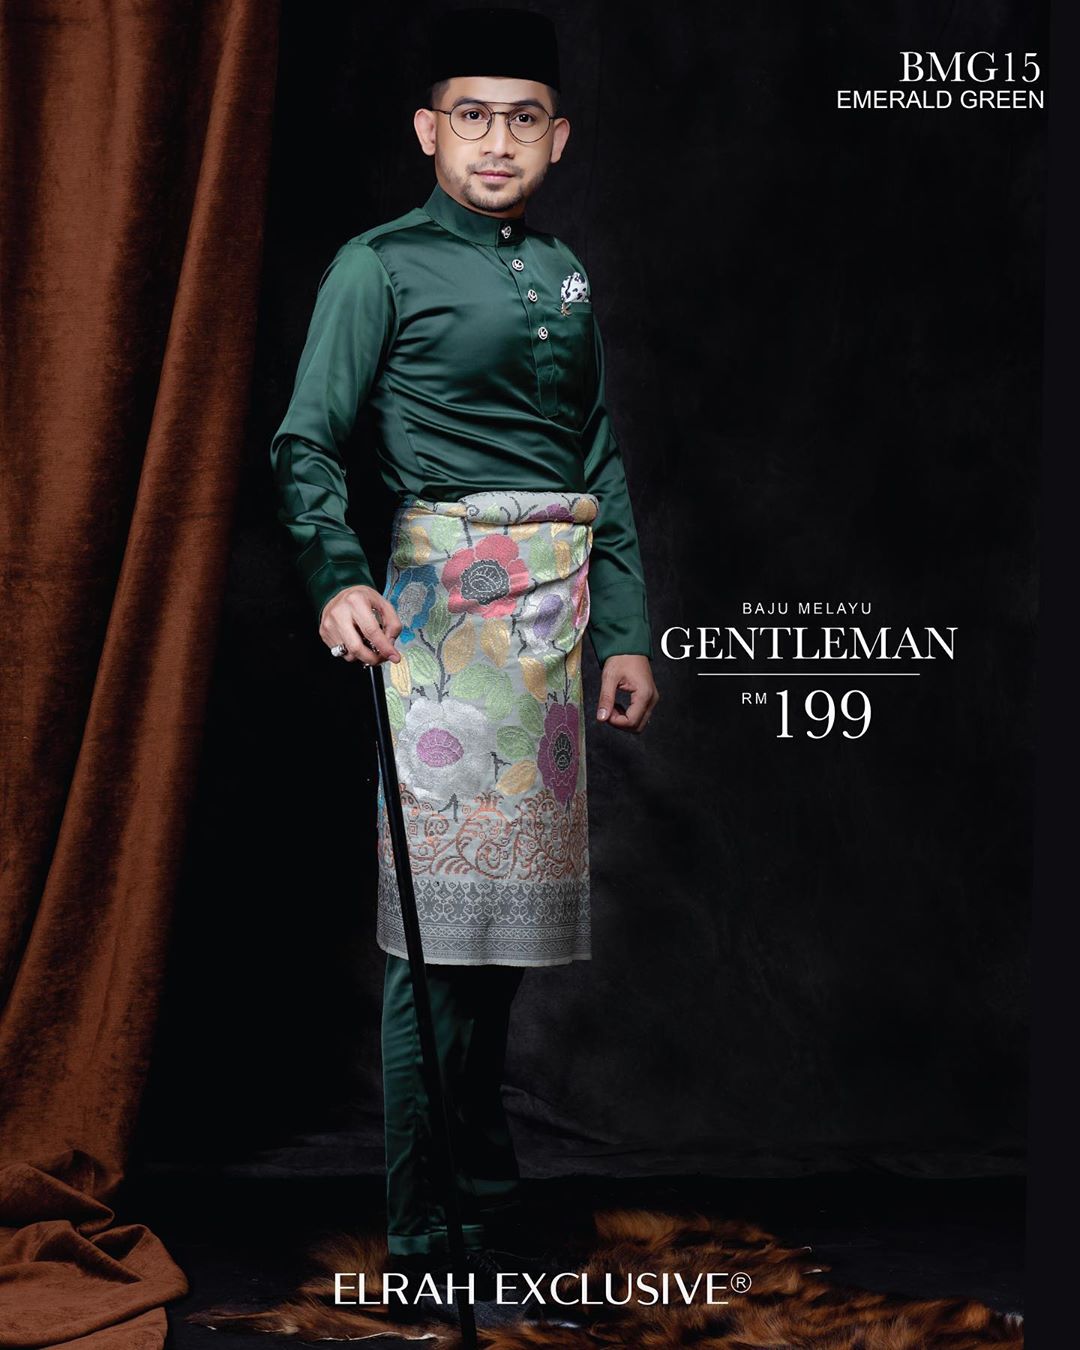 Baju Melayu Gentleman Emerald Green